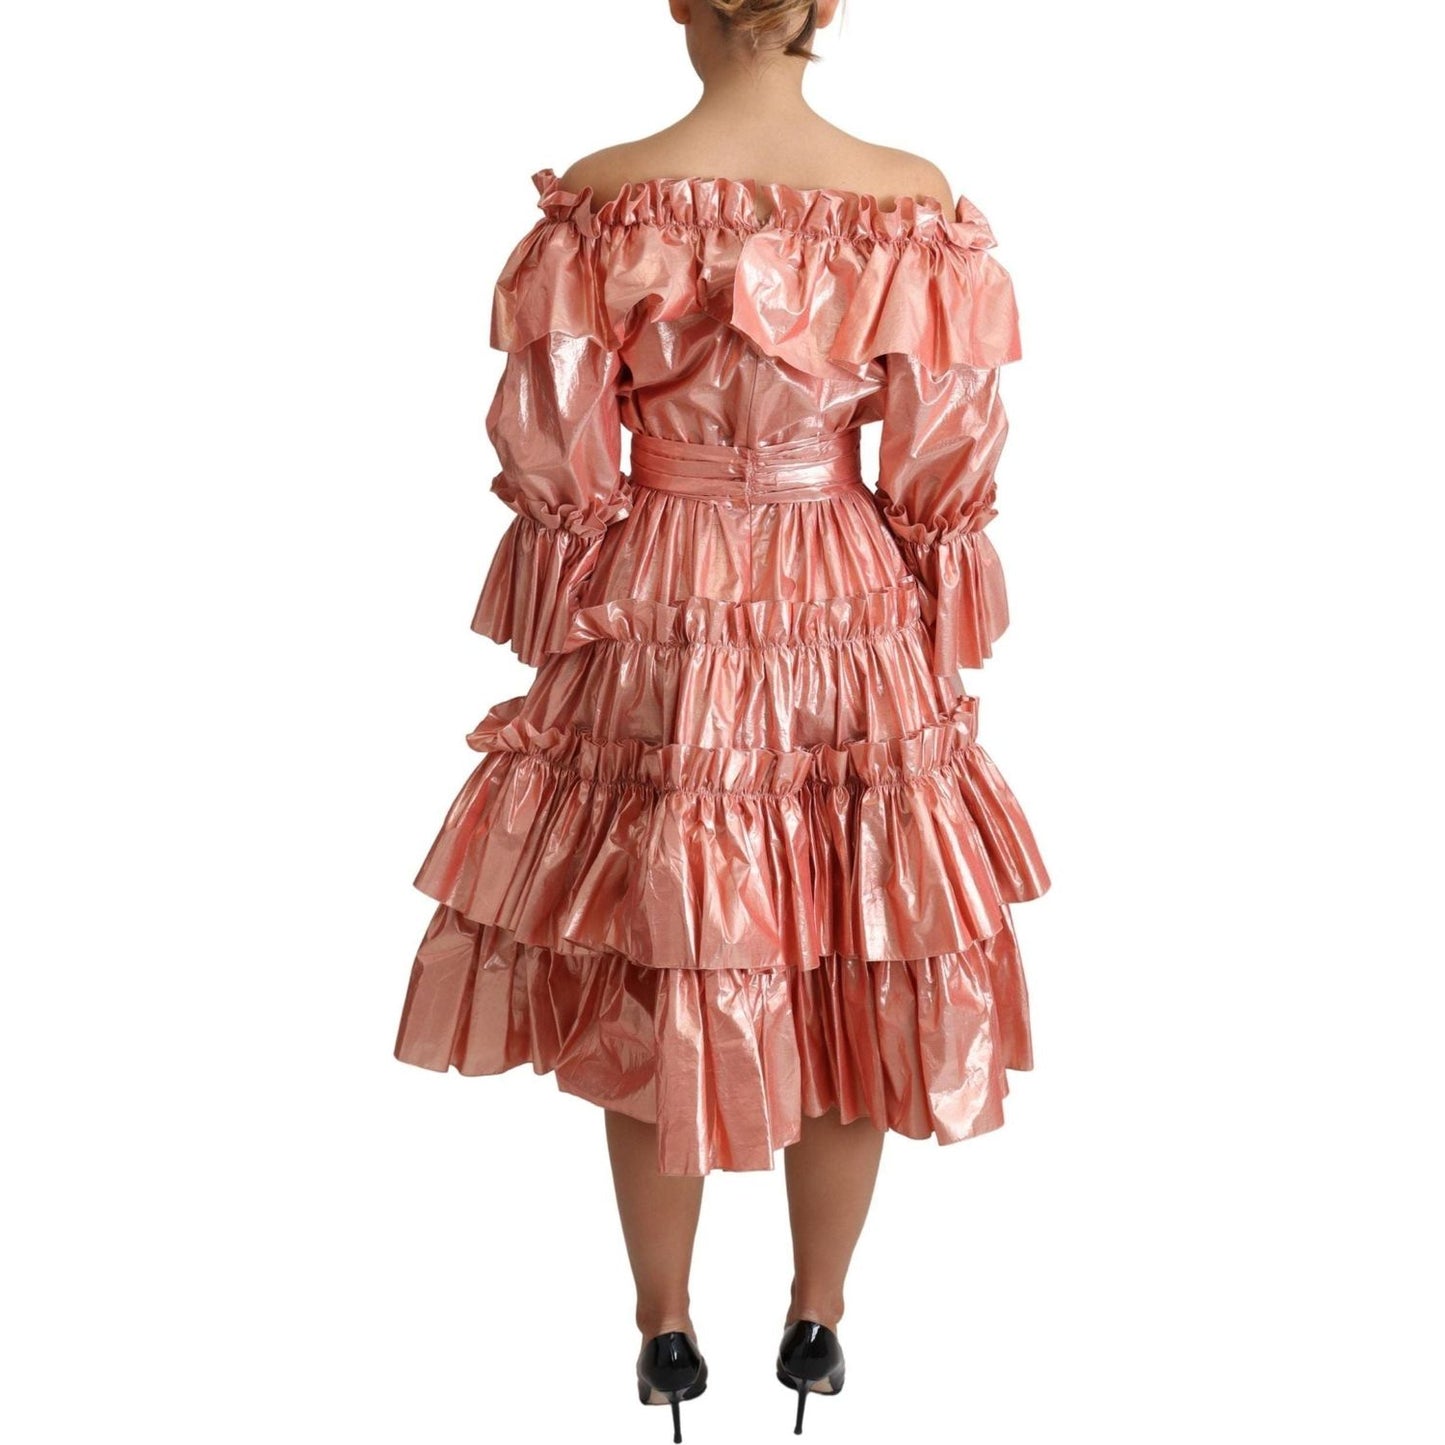 Dolce & Gabbana Pink Metallic Ruffled Gown Elegance pink-ruffled-dress-silk-cotton-gown-dress IMG_0900-scaled-4d7a1462-f01.jpg